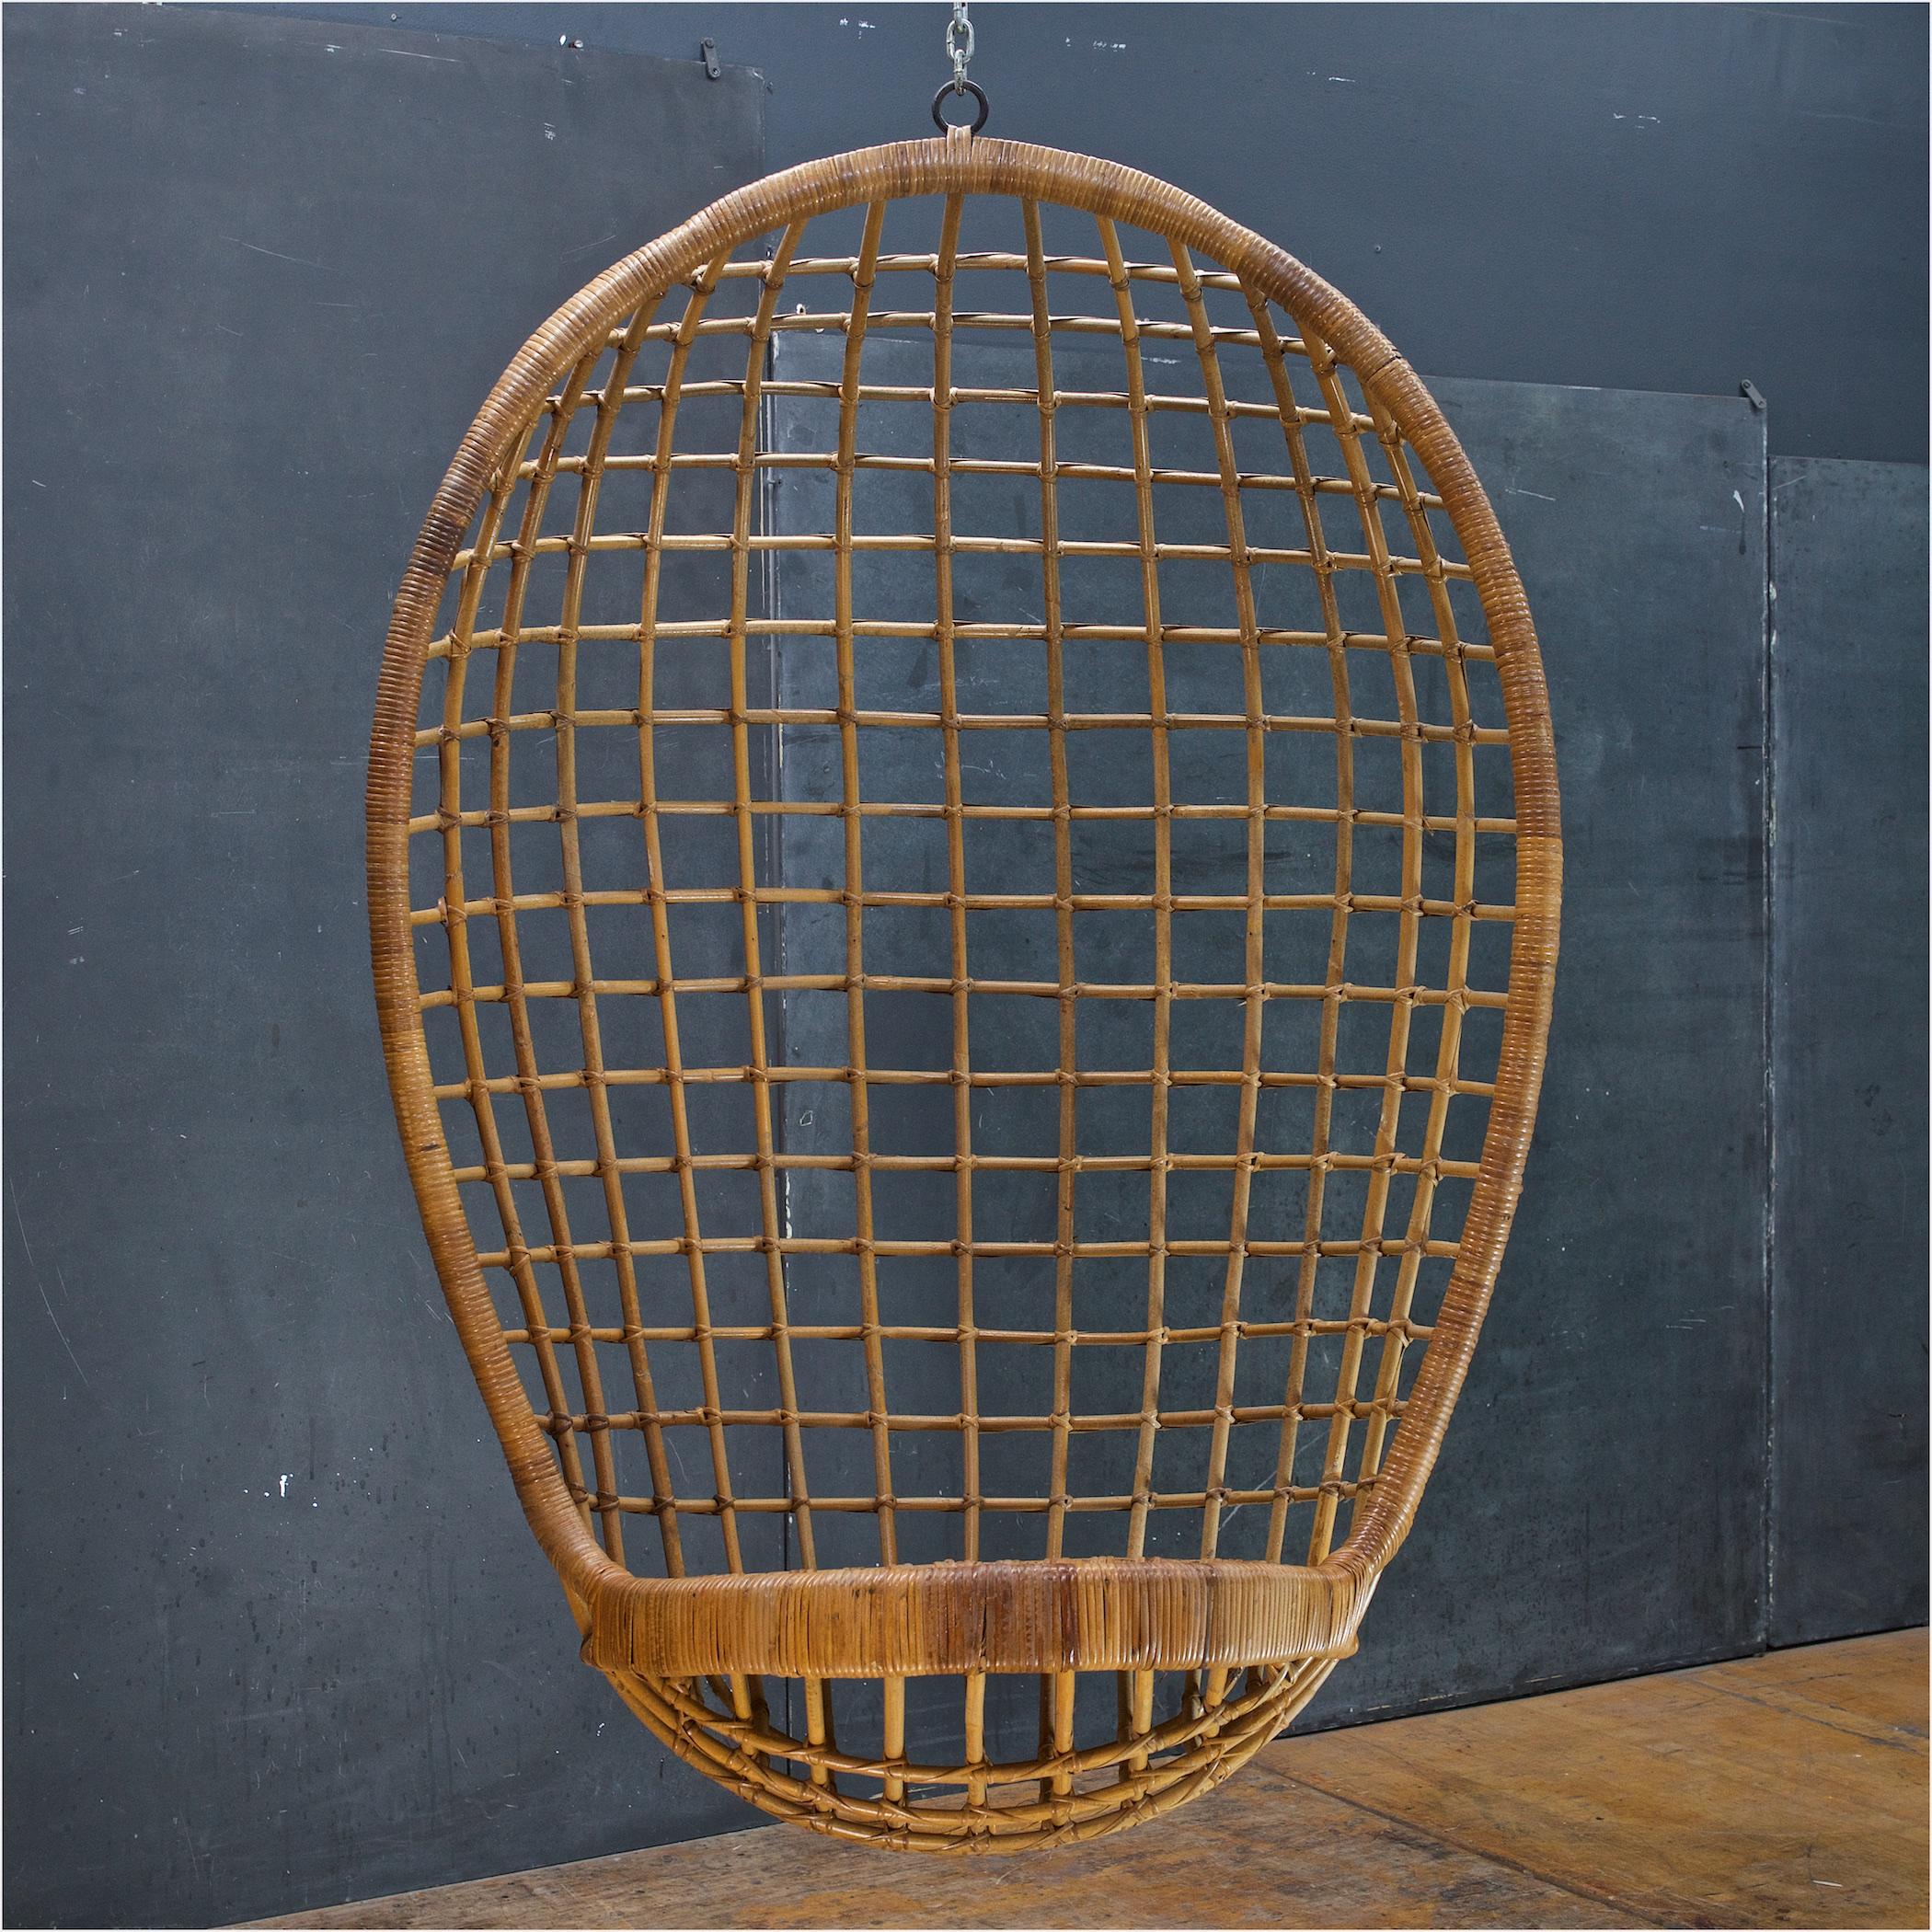 American 1970s Danny Ho Fong Rare Swinging Chair Mid-Century California Design Tropi-Cal